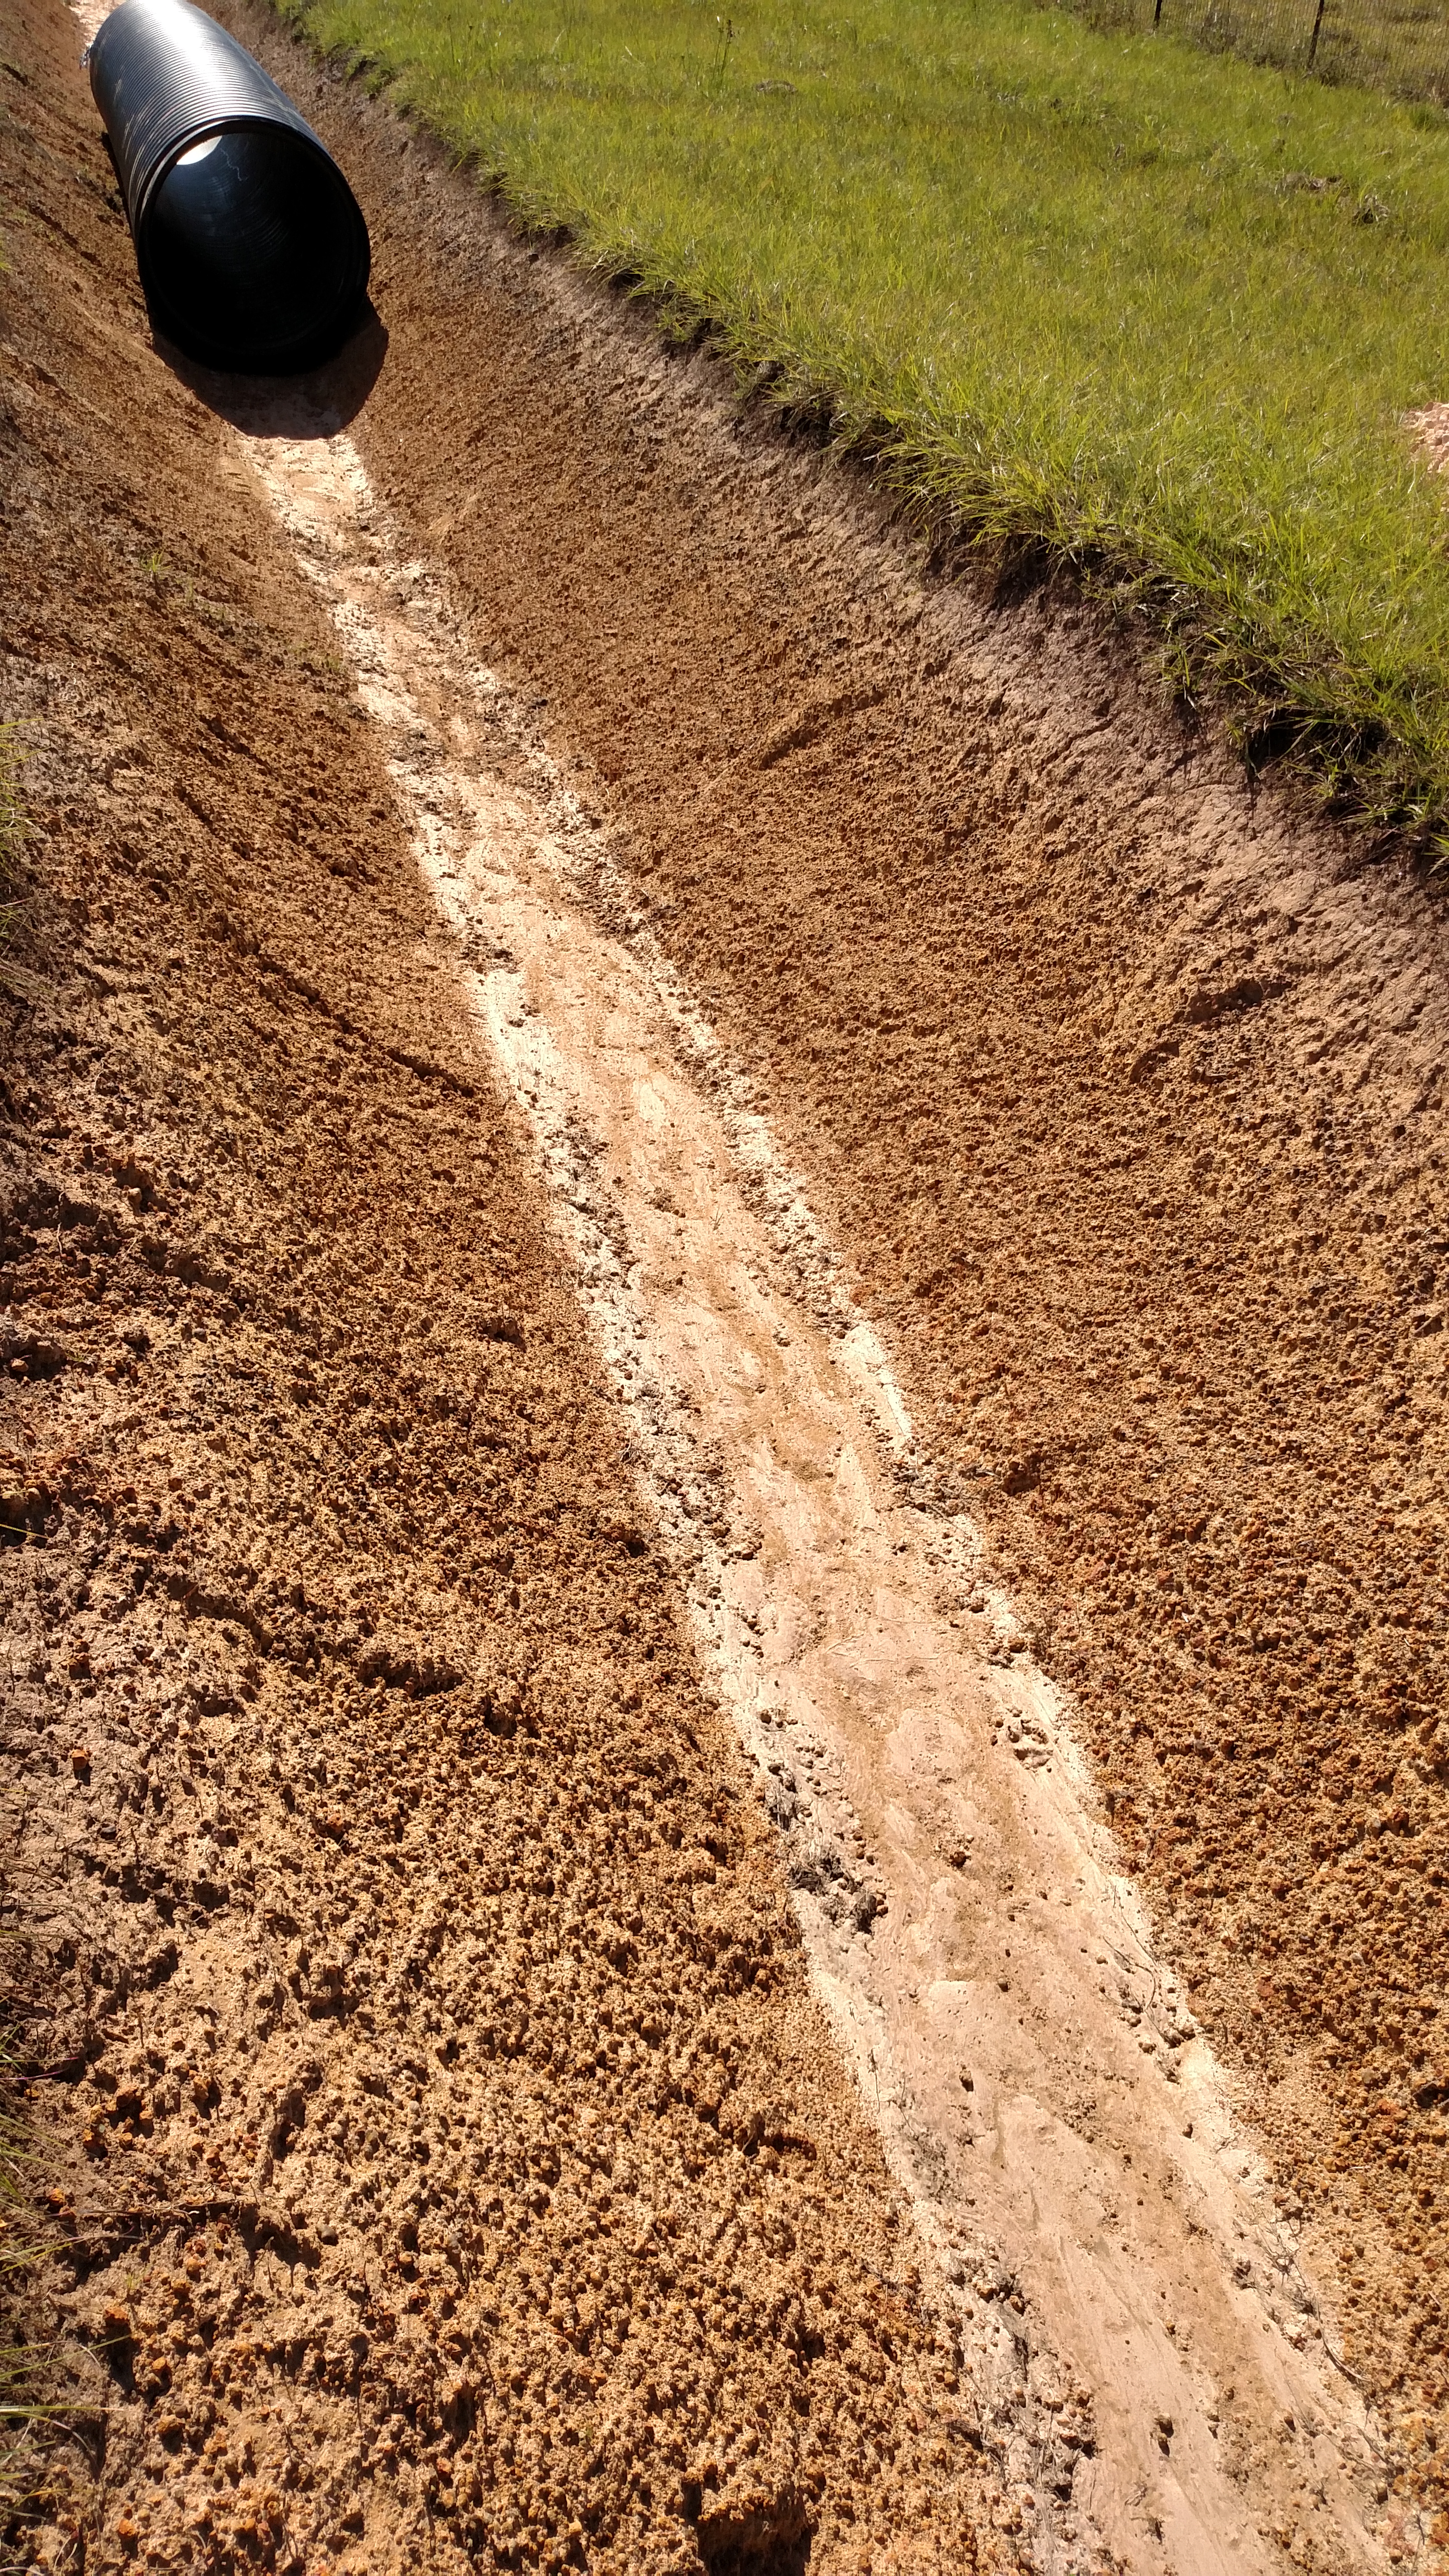 Drainage ditch excavation